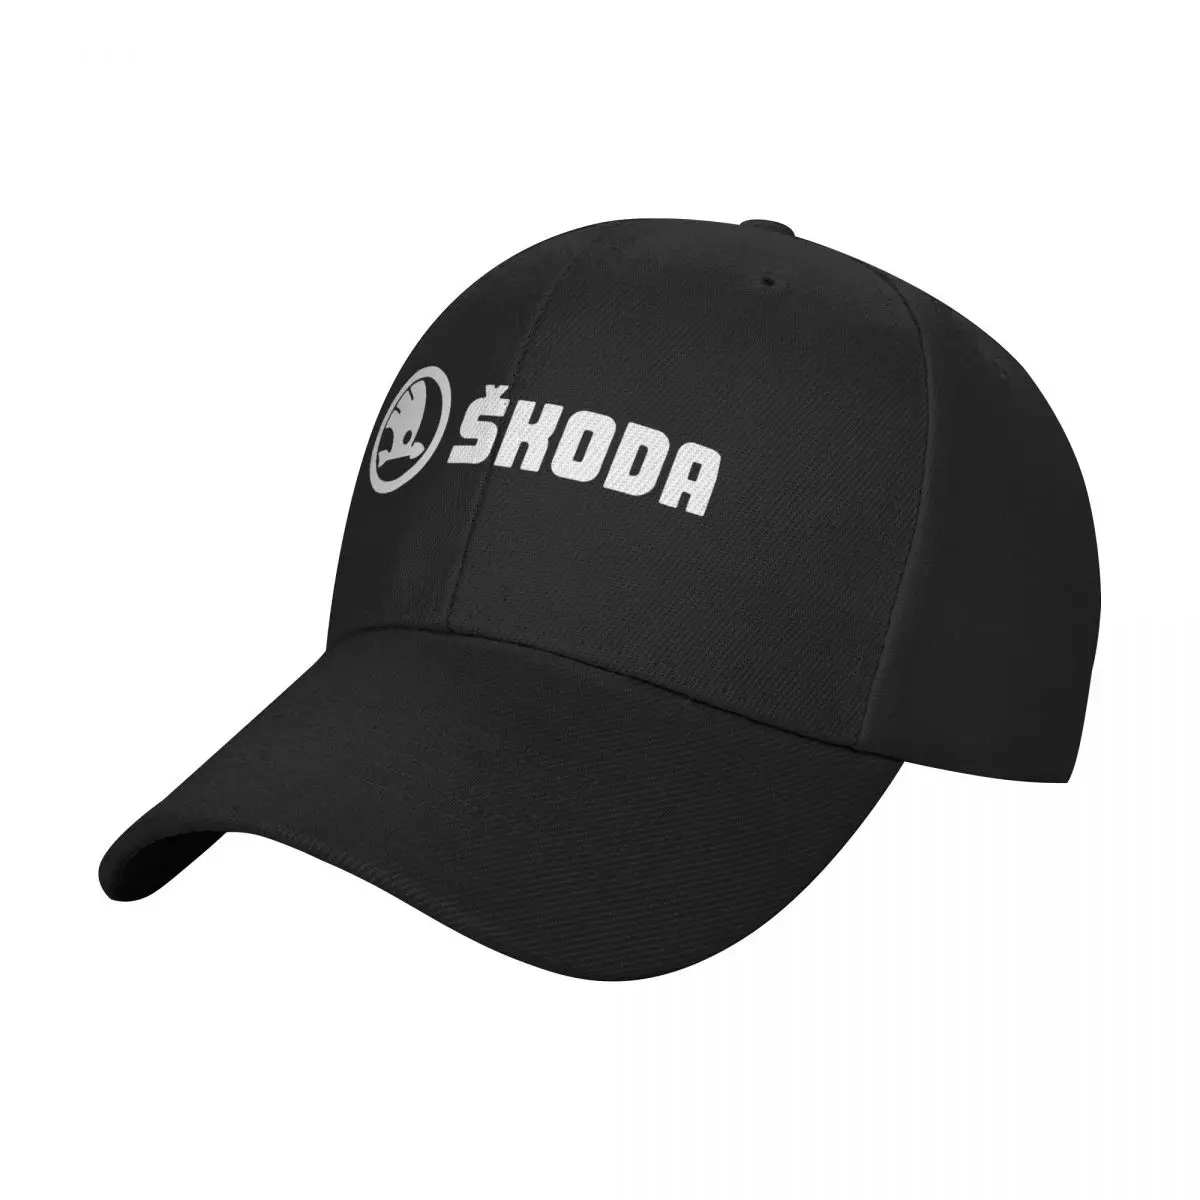 

Holding Skoda Baseball Caps Solid Color Adjustable Leisure Caps Hat Outdoor Dust proof Curved Sun Visor Hat